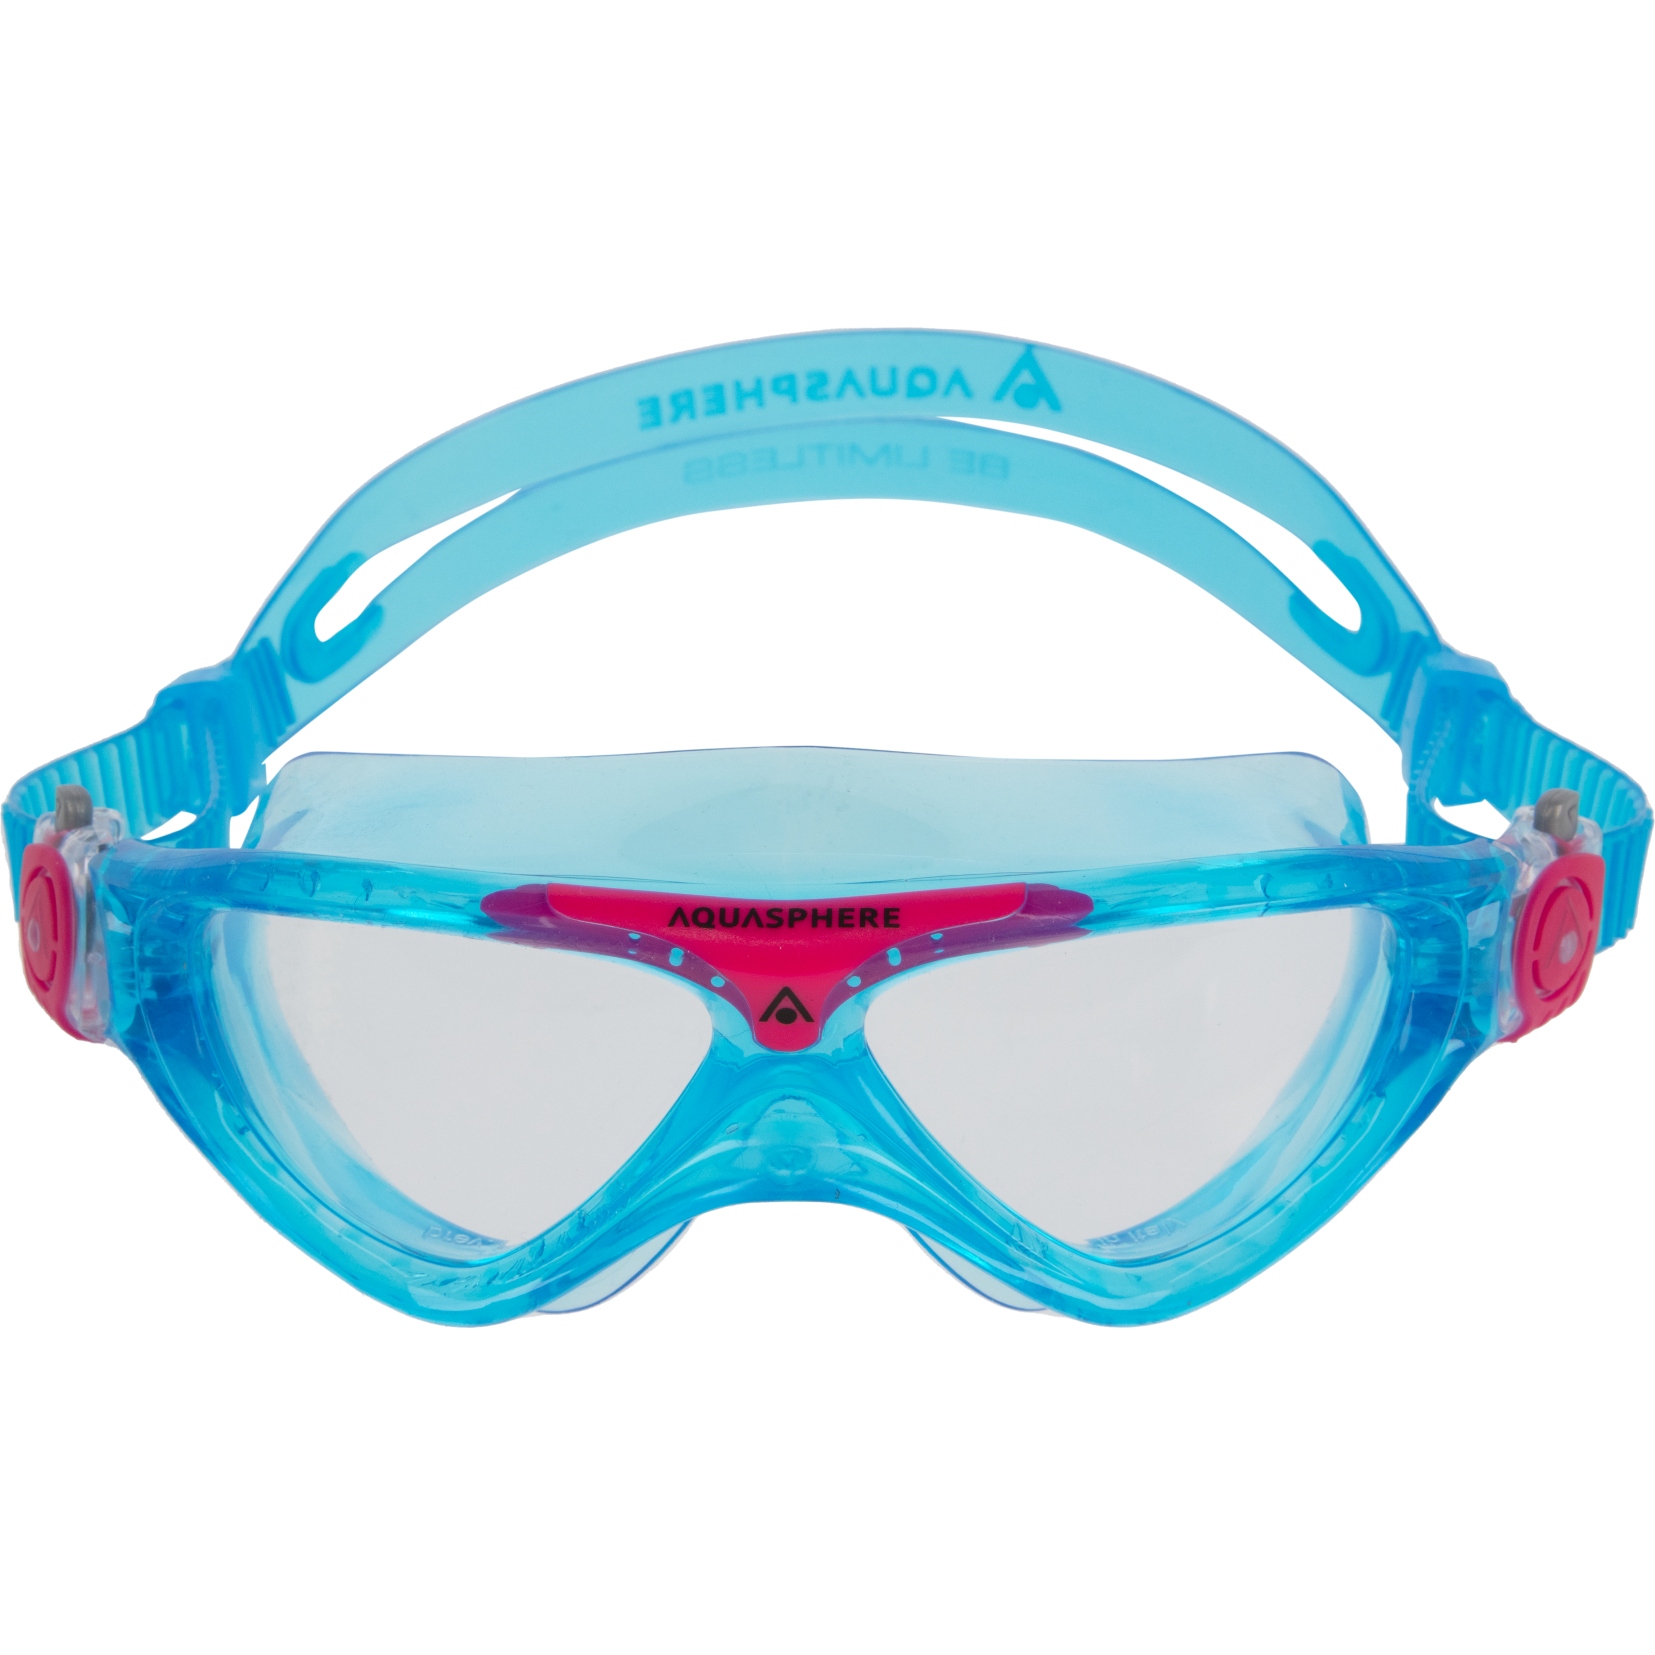 Productfoto van AQUASPHERE Vista Junior Kinderen Zwembril - Transparant - Turquoise/Roze